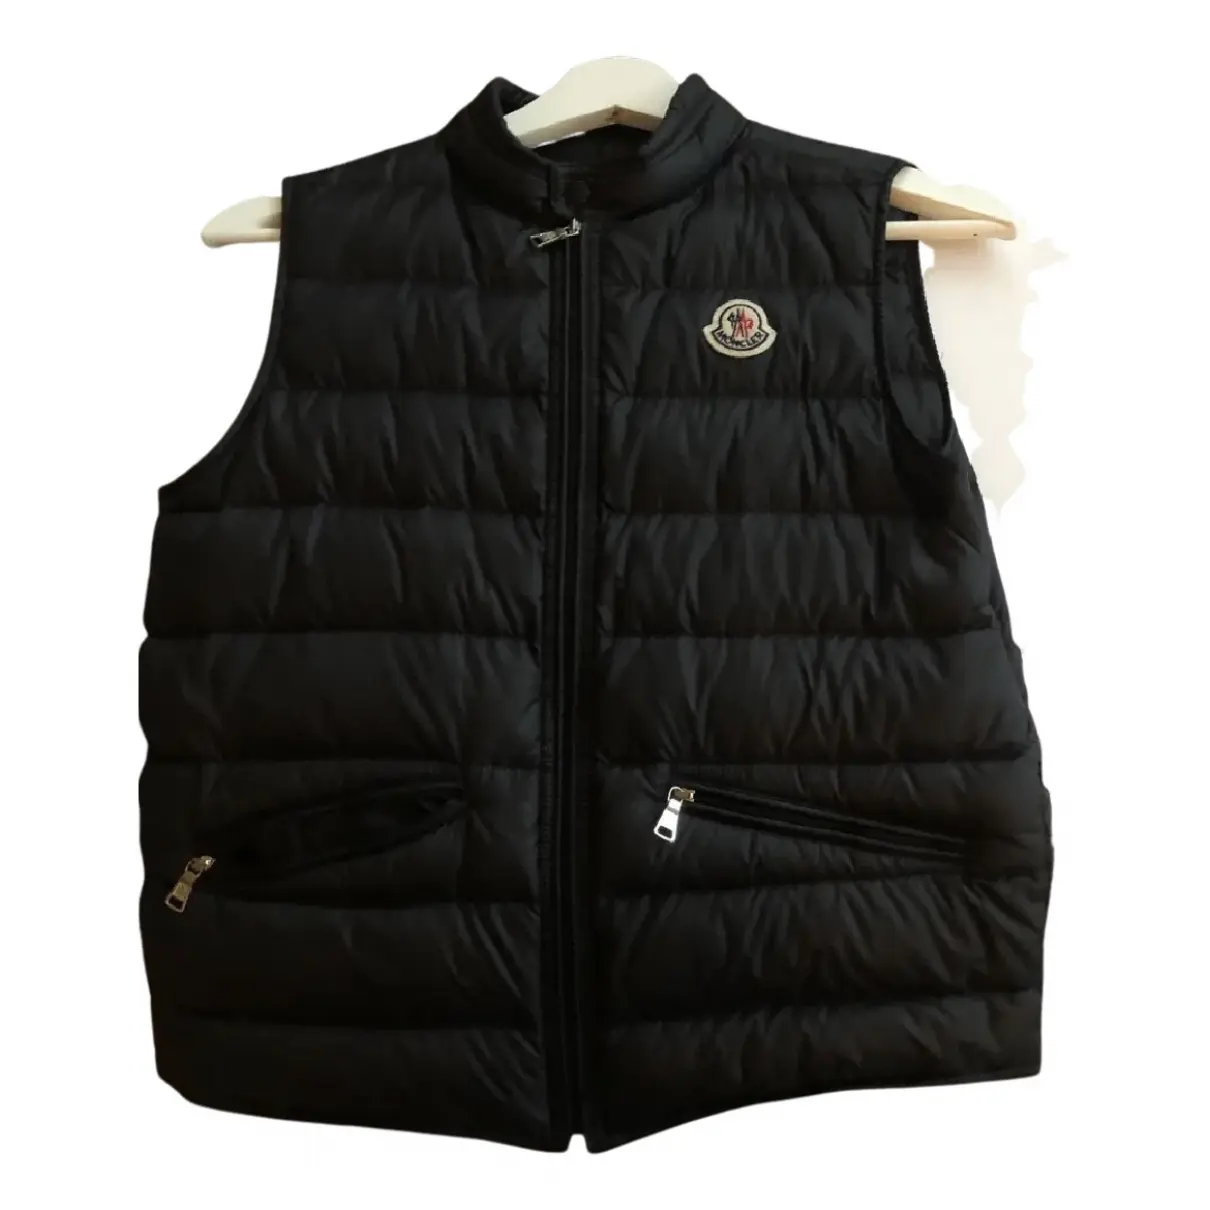 Buy Moncler Jacket & coat online